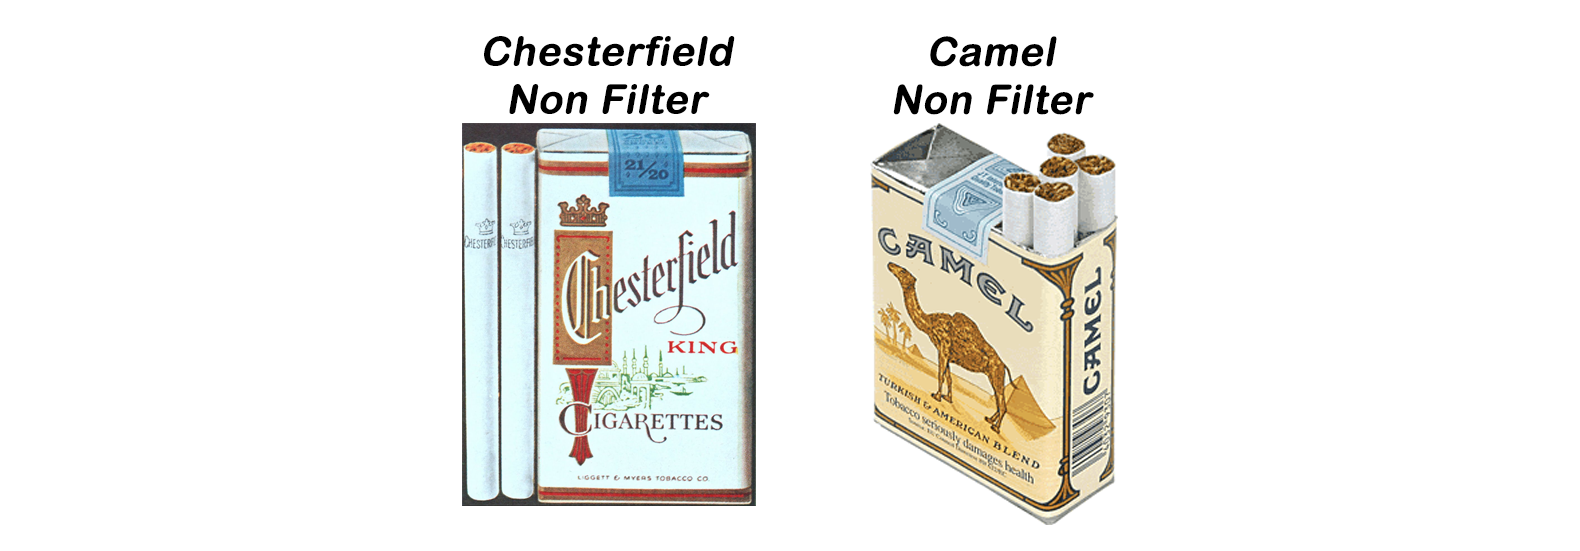 Честерфилд браун сигареты. Chesterfield сигареты США. Сигареты Честерфилд без фильтра. Сигареты Chesterfield в мягкой пачке. Фильтры сигарет Chesterfield.